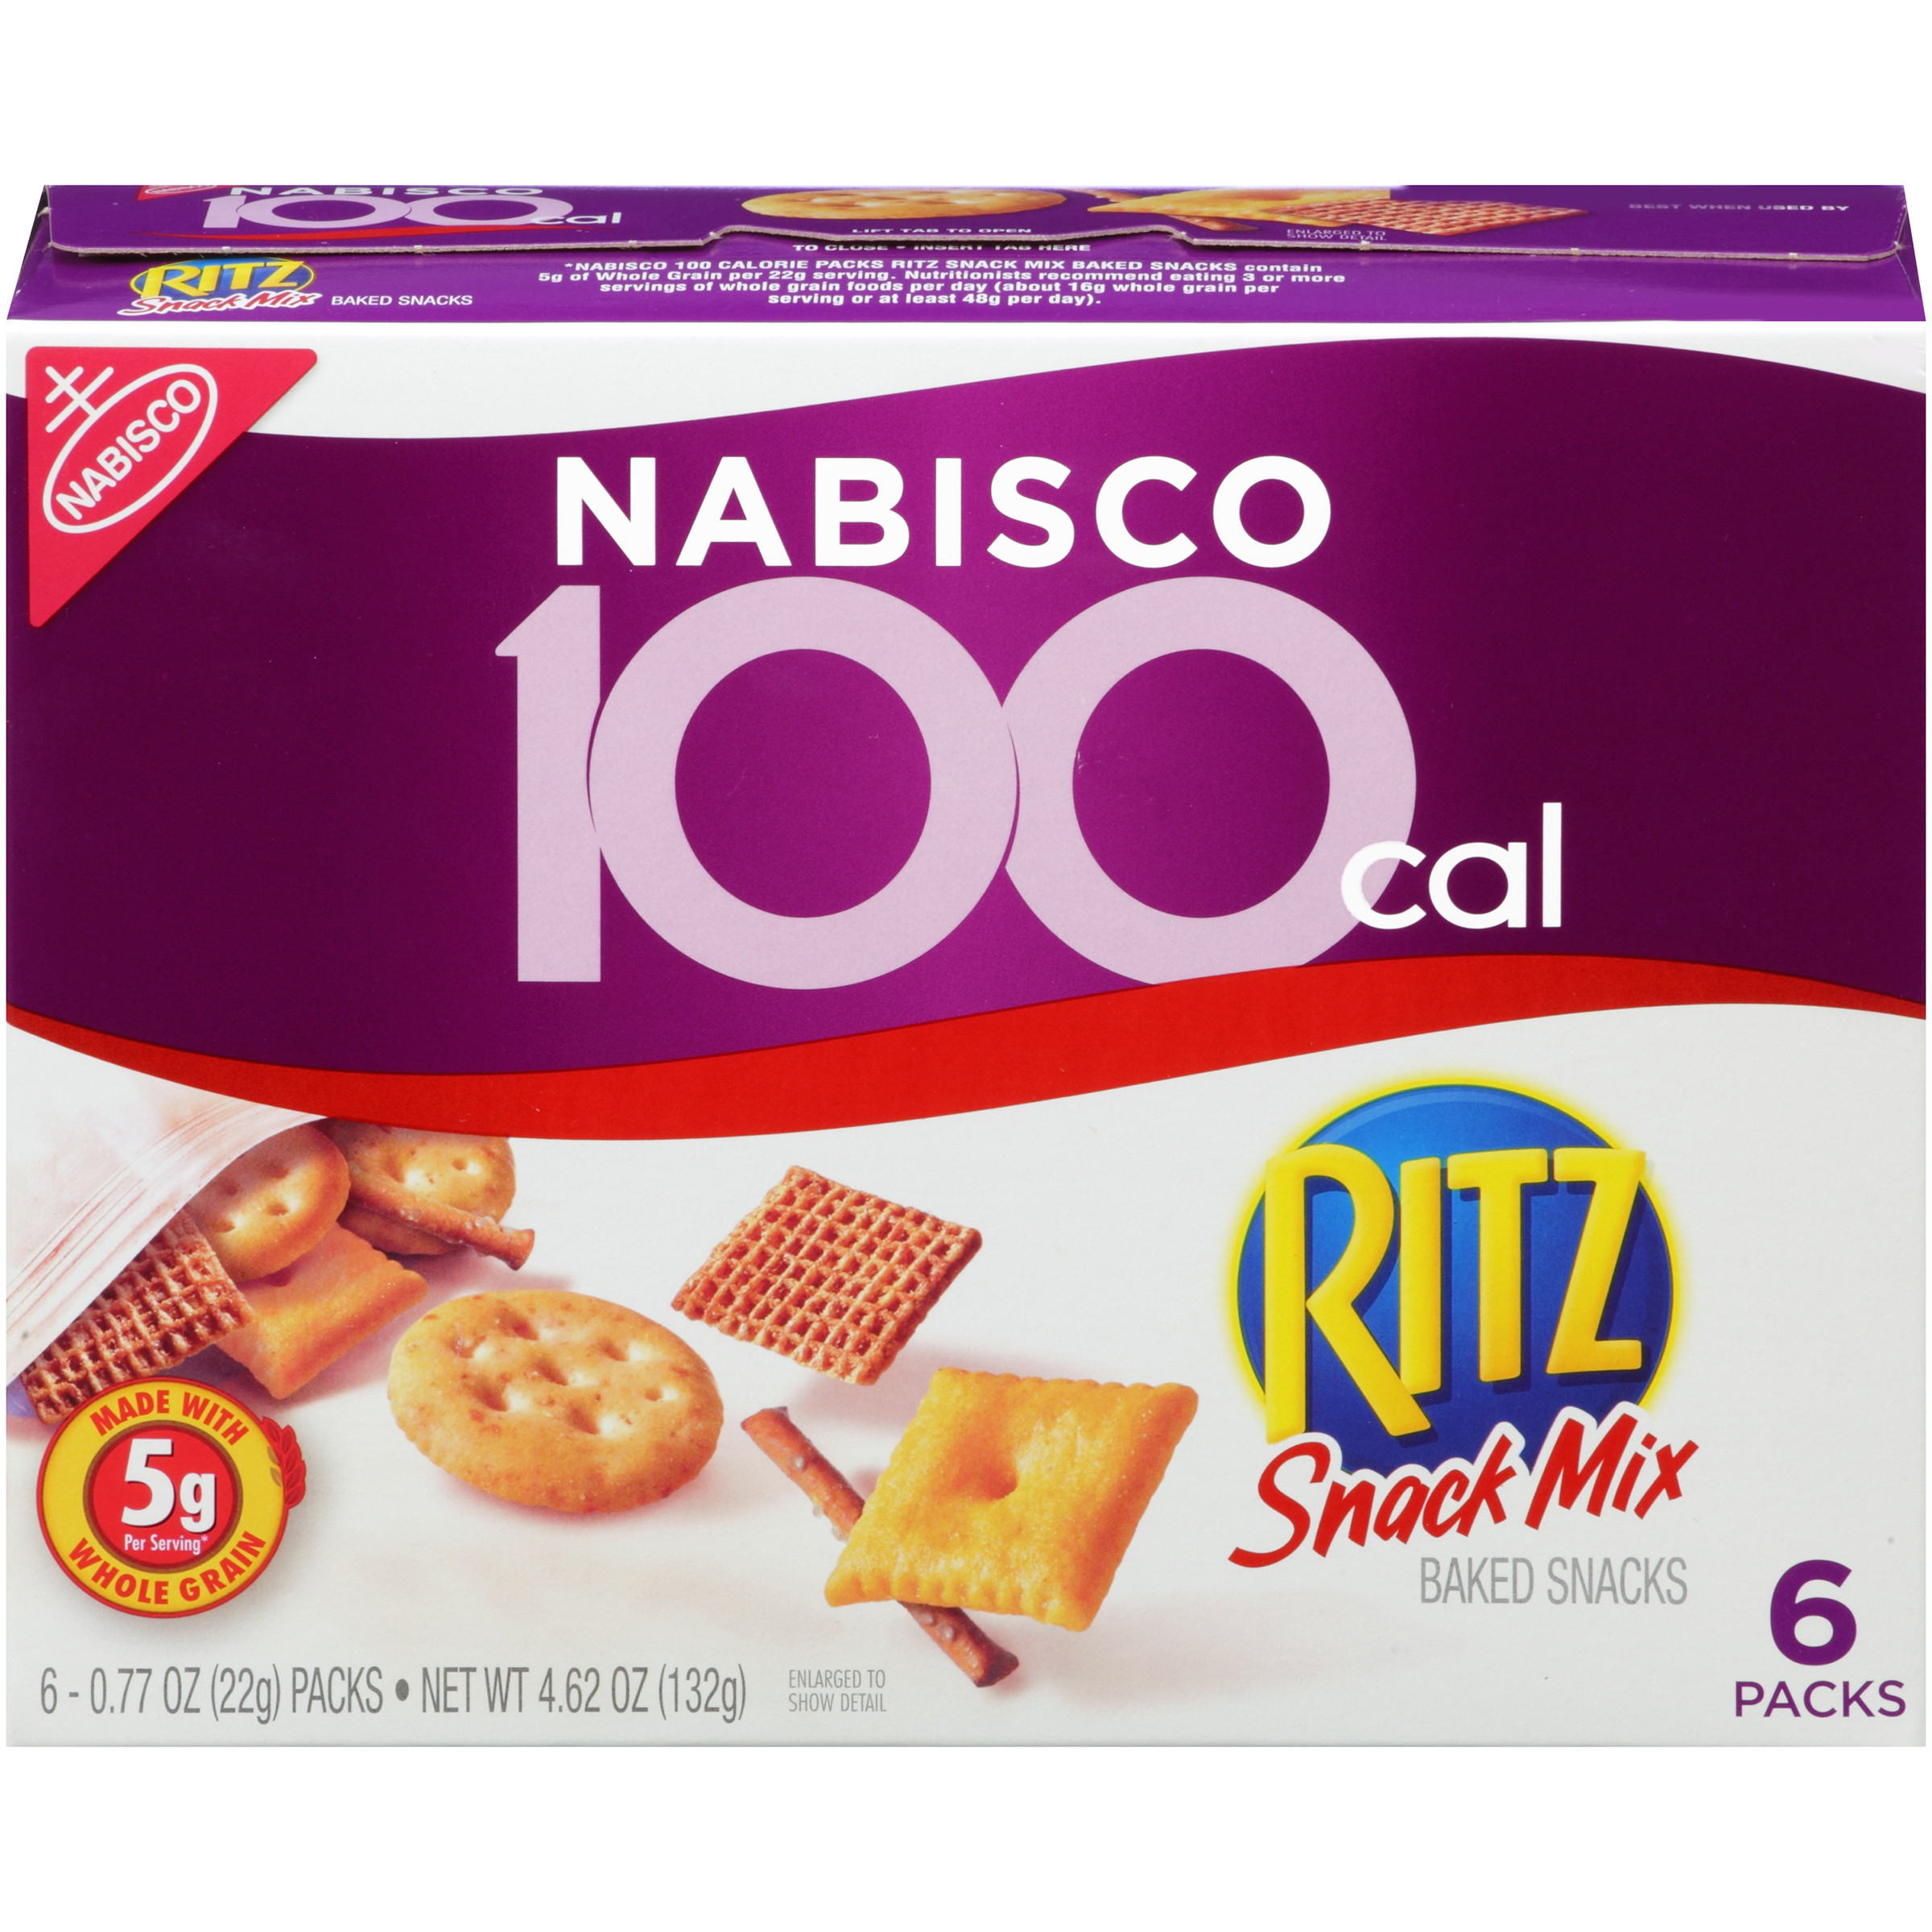 Nabisco Snack Crackers
 Nabisco 100 Calorie Packs Baked Snacks Ritz Snack Mix 6